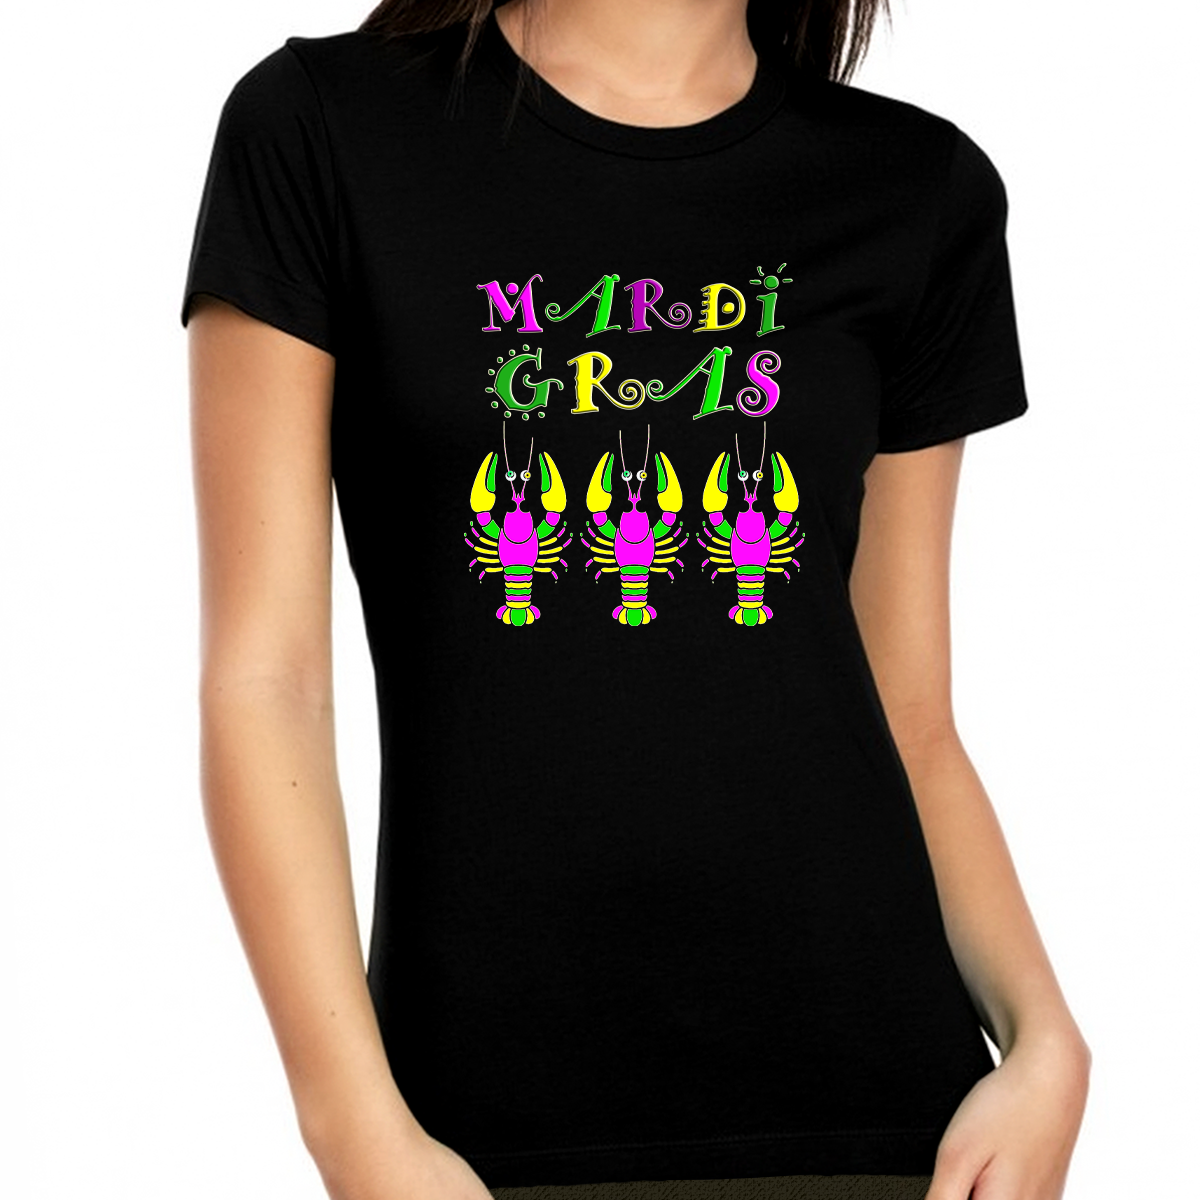 Mardi Gras Shirts for Women Funny Mardi Gras Shirts Cajun Crayfish Mardi Gras Shirt Mardi Gras Outfit